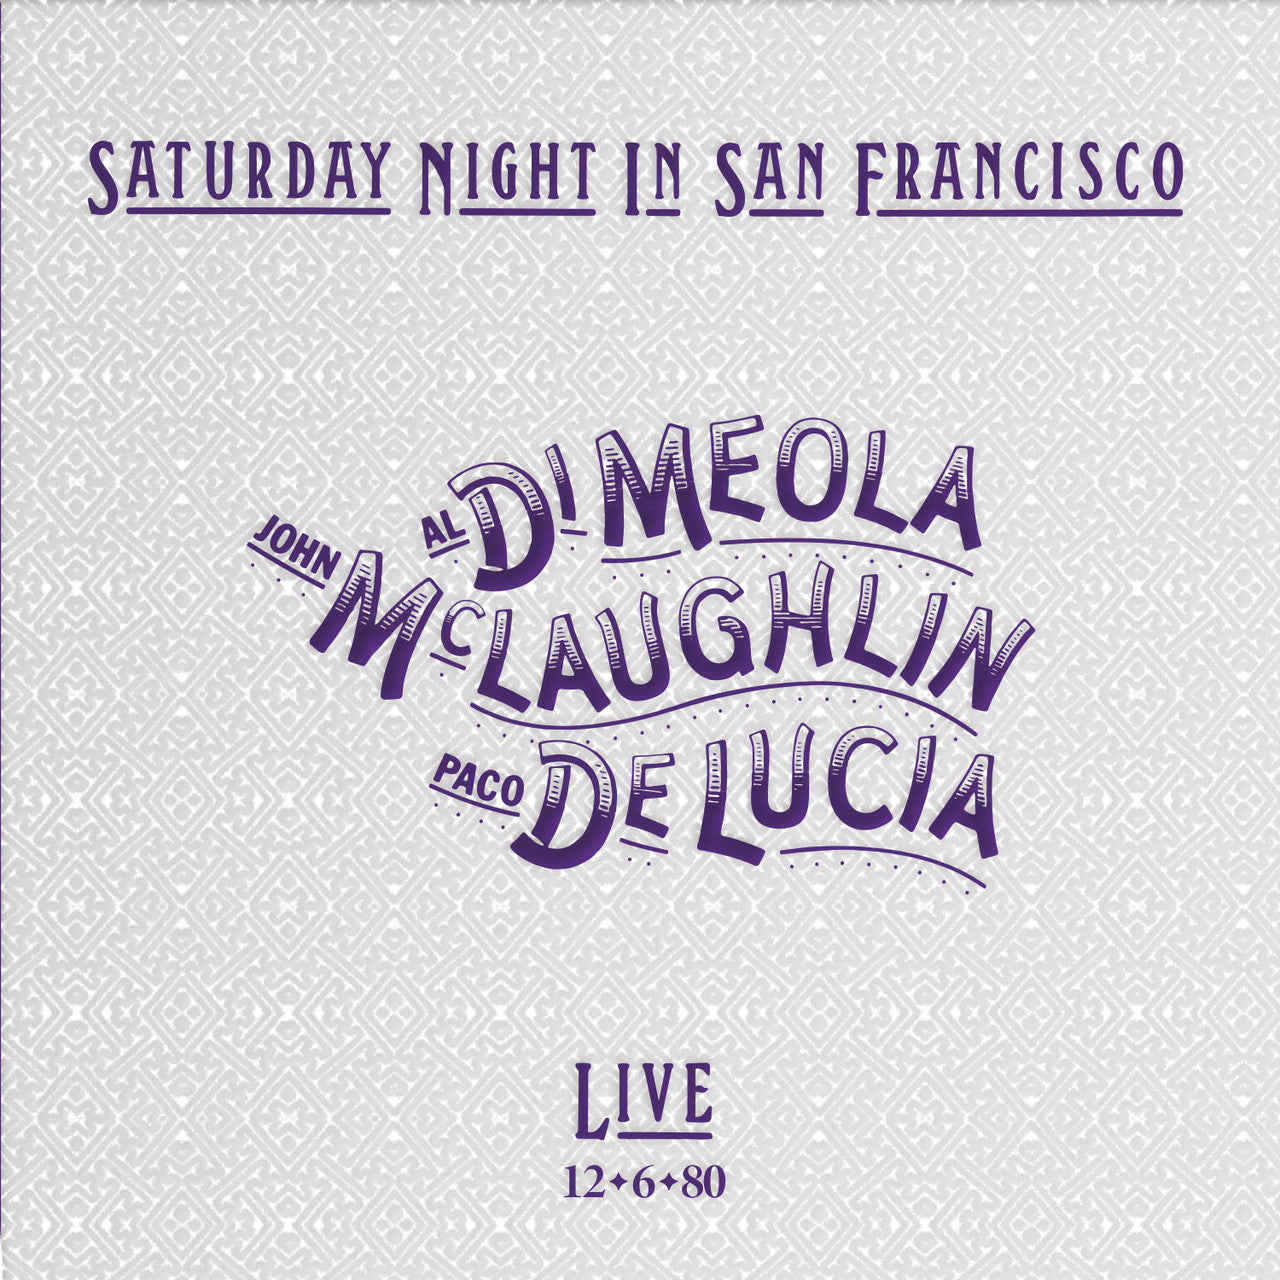 John McLaughlin - Saturday Night In San Francisco